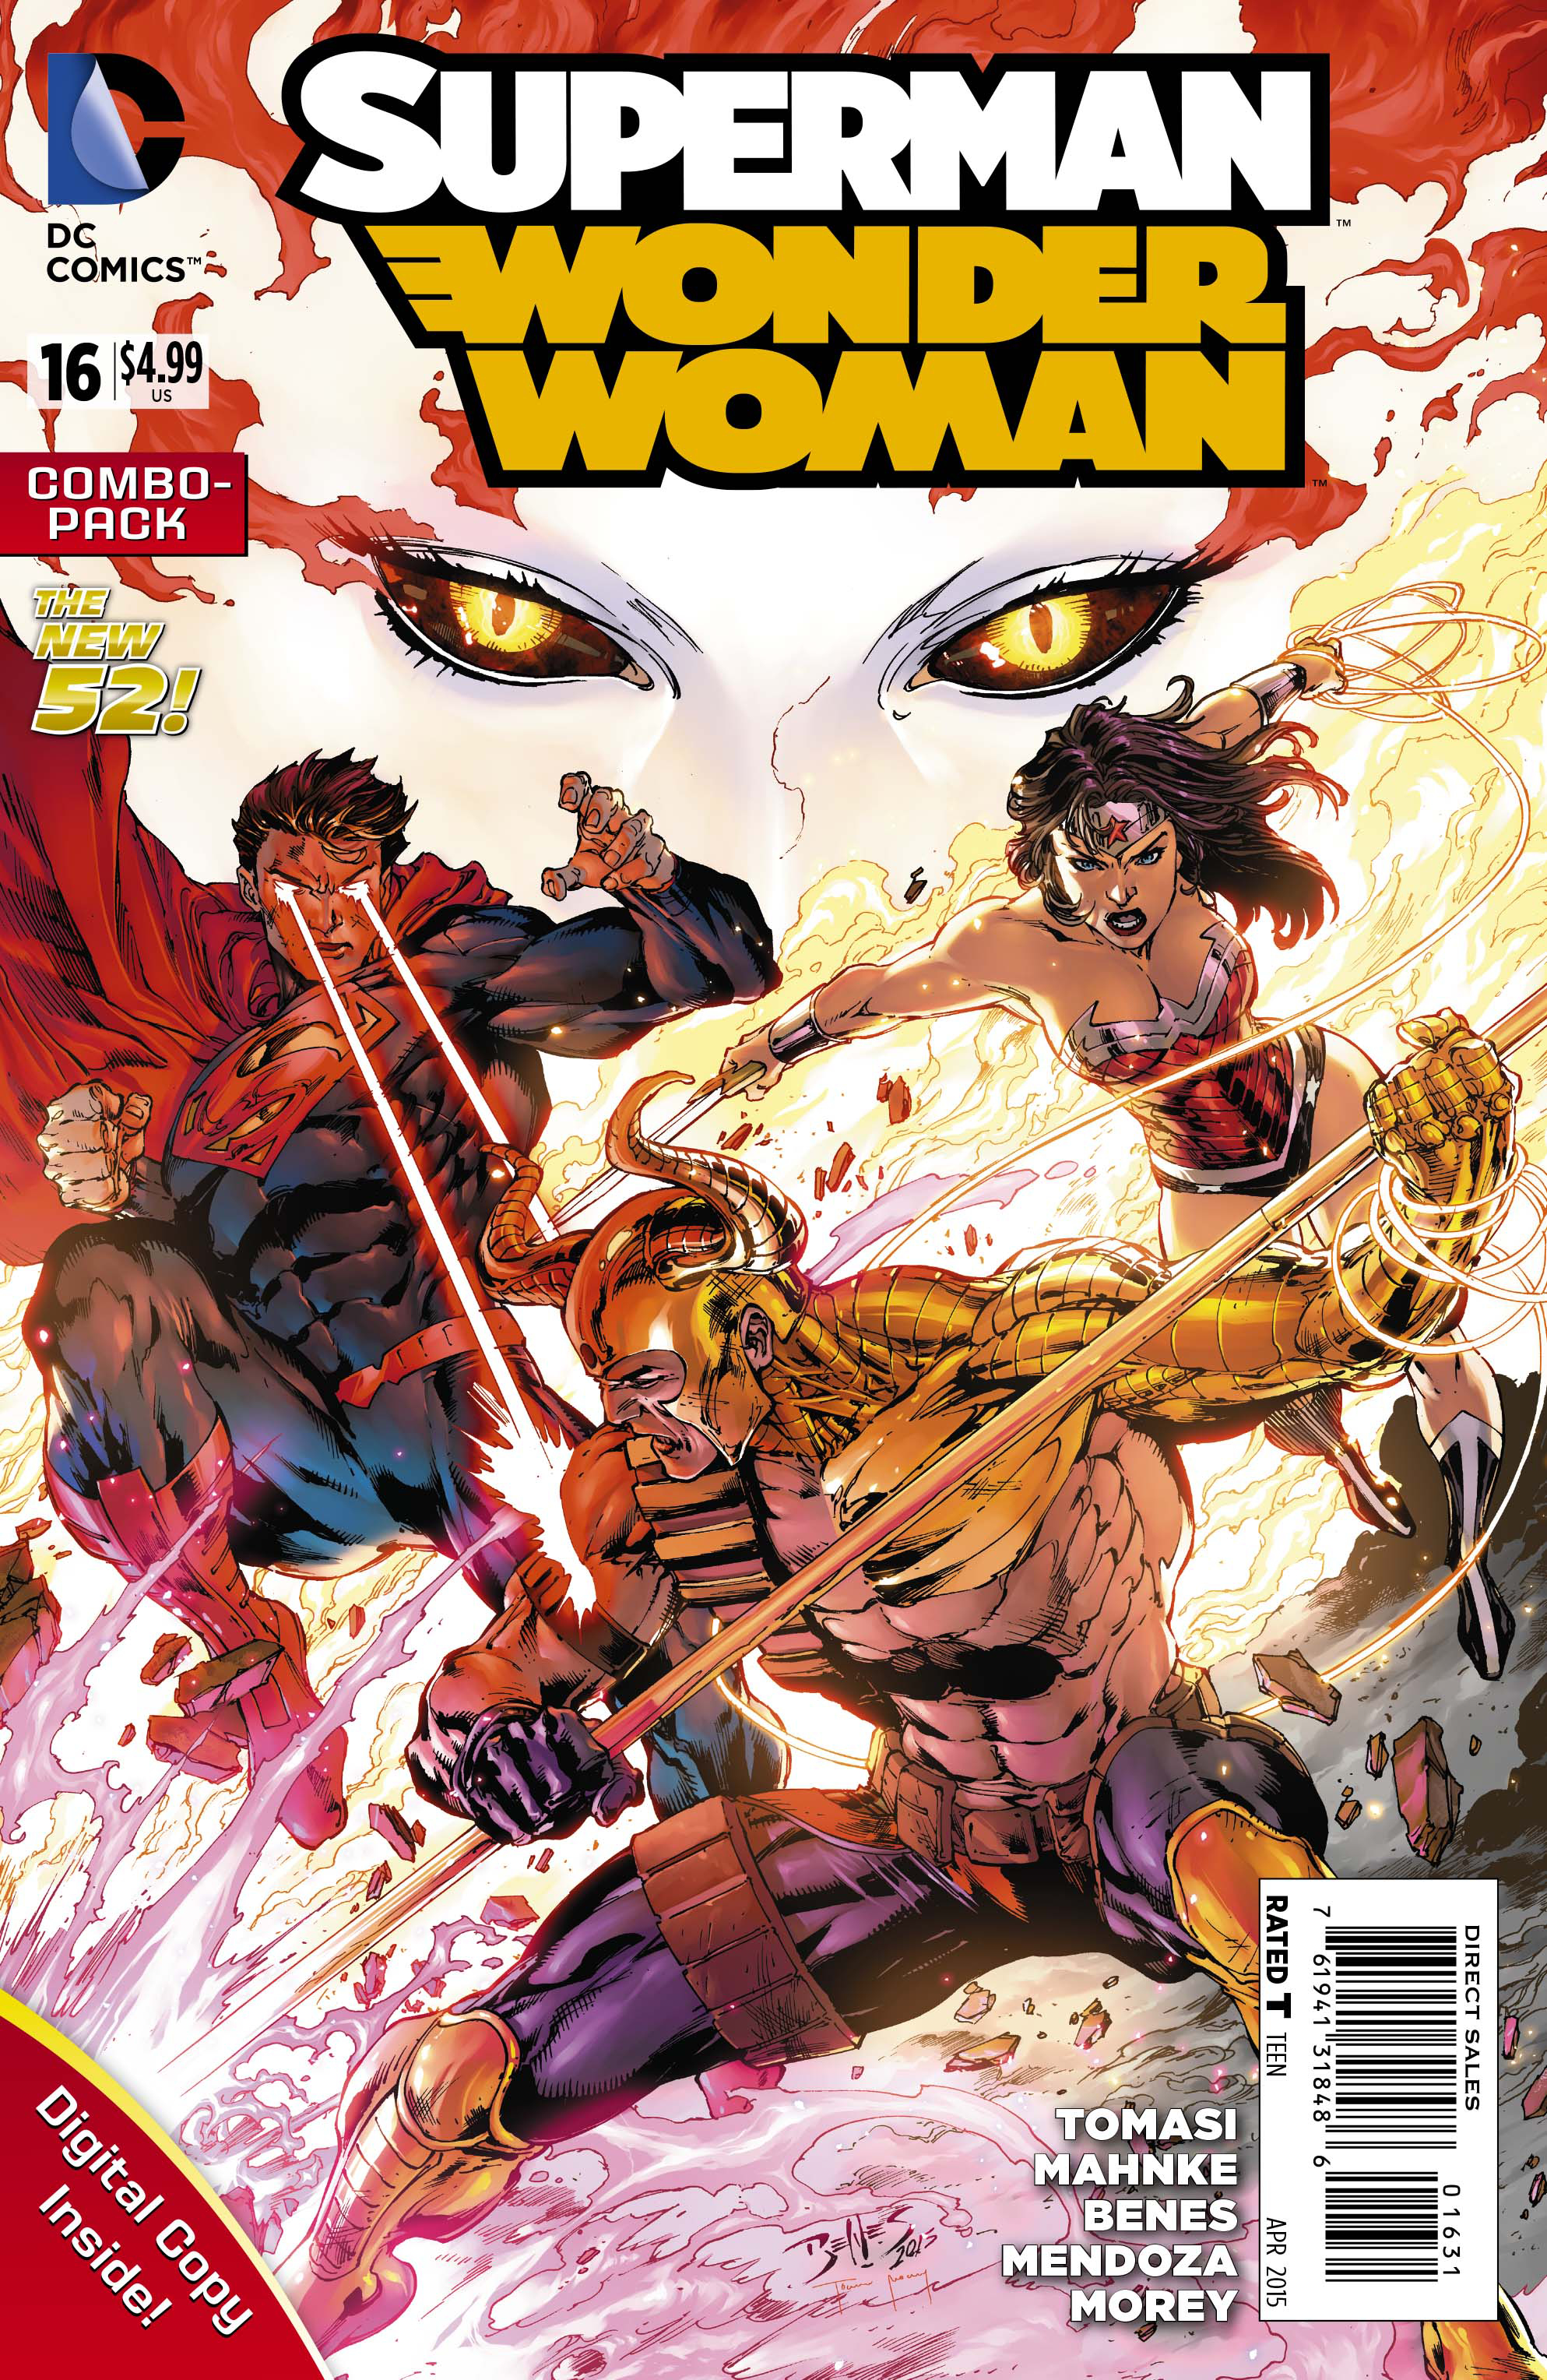 SUPERMAN WONDER WOMAN #16 COMBO PACK